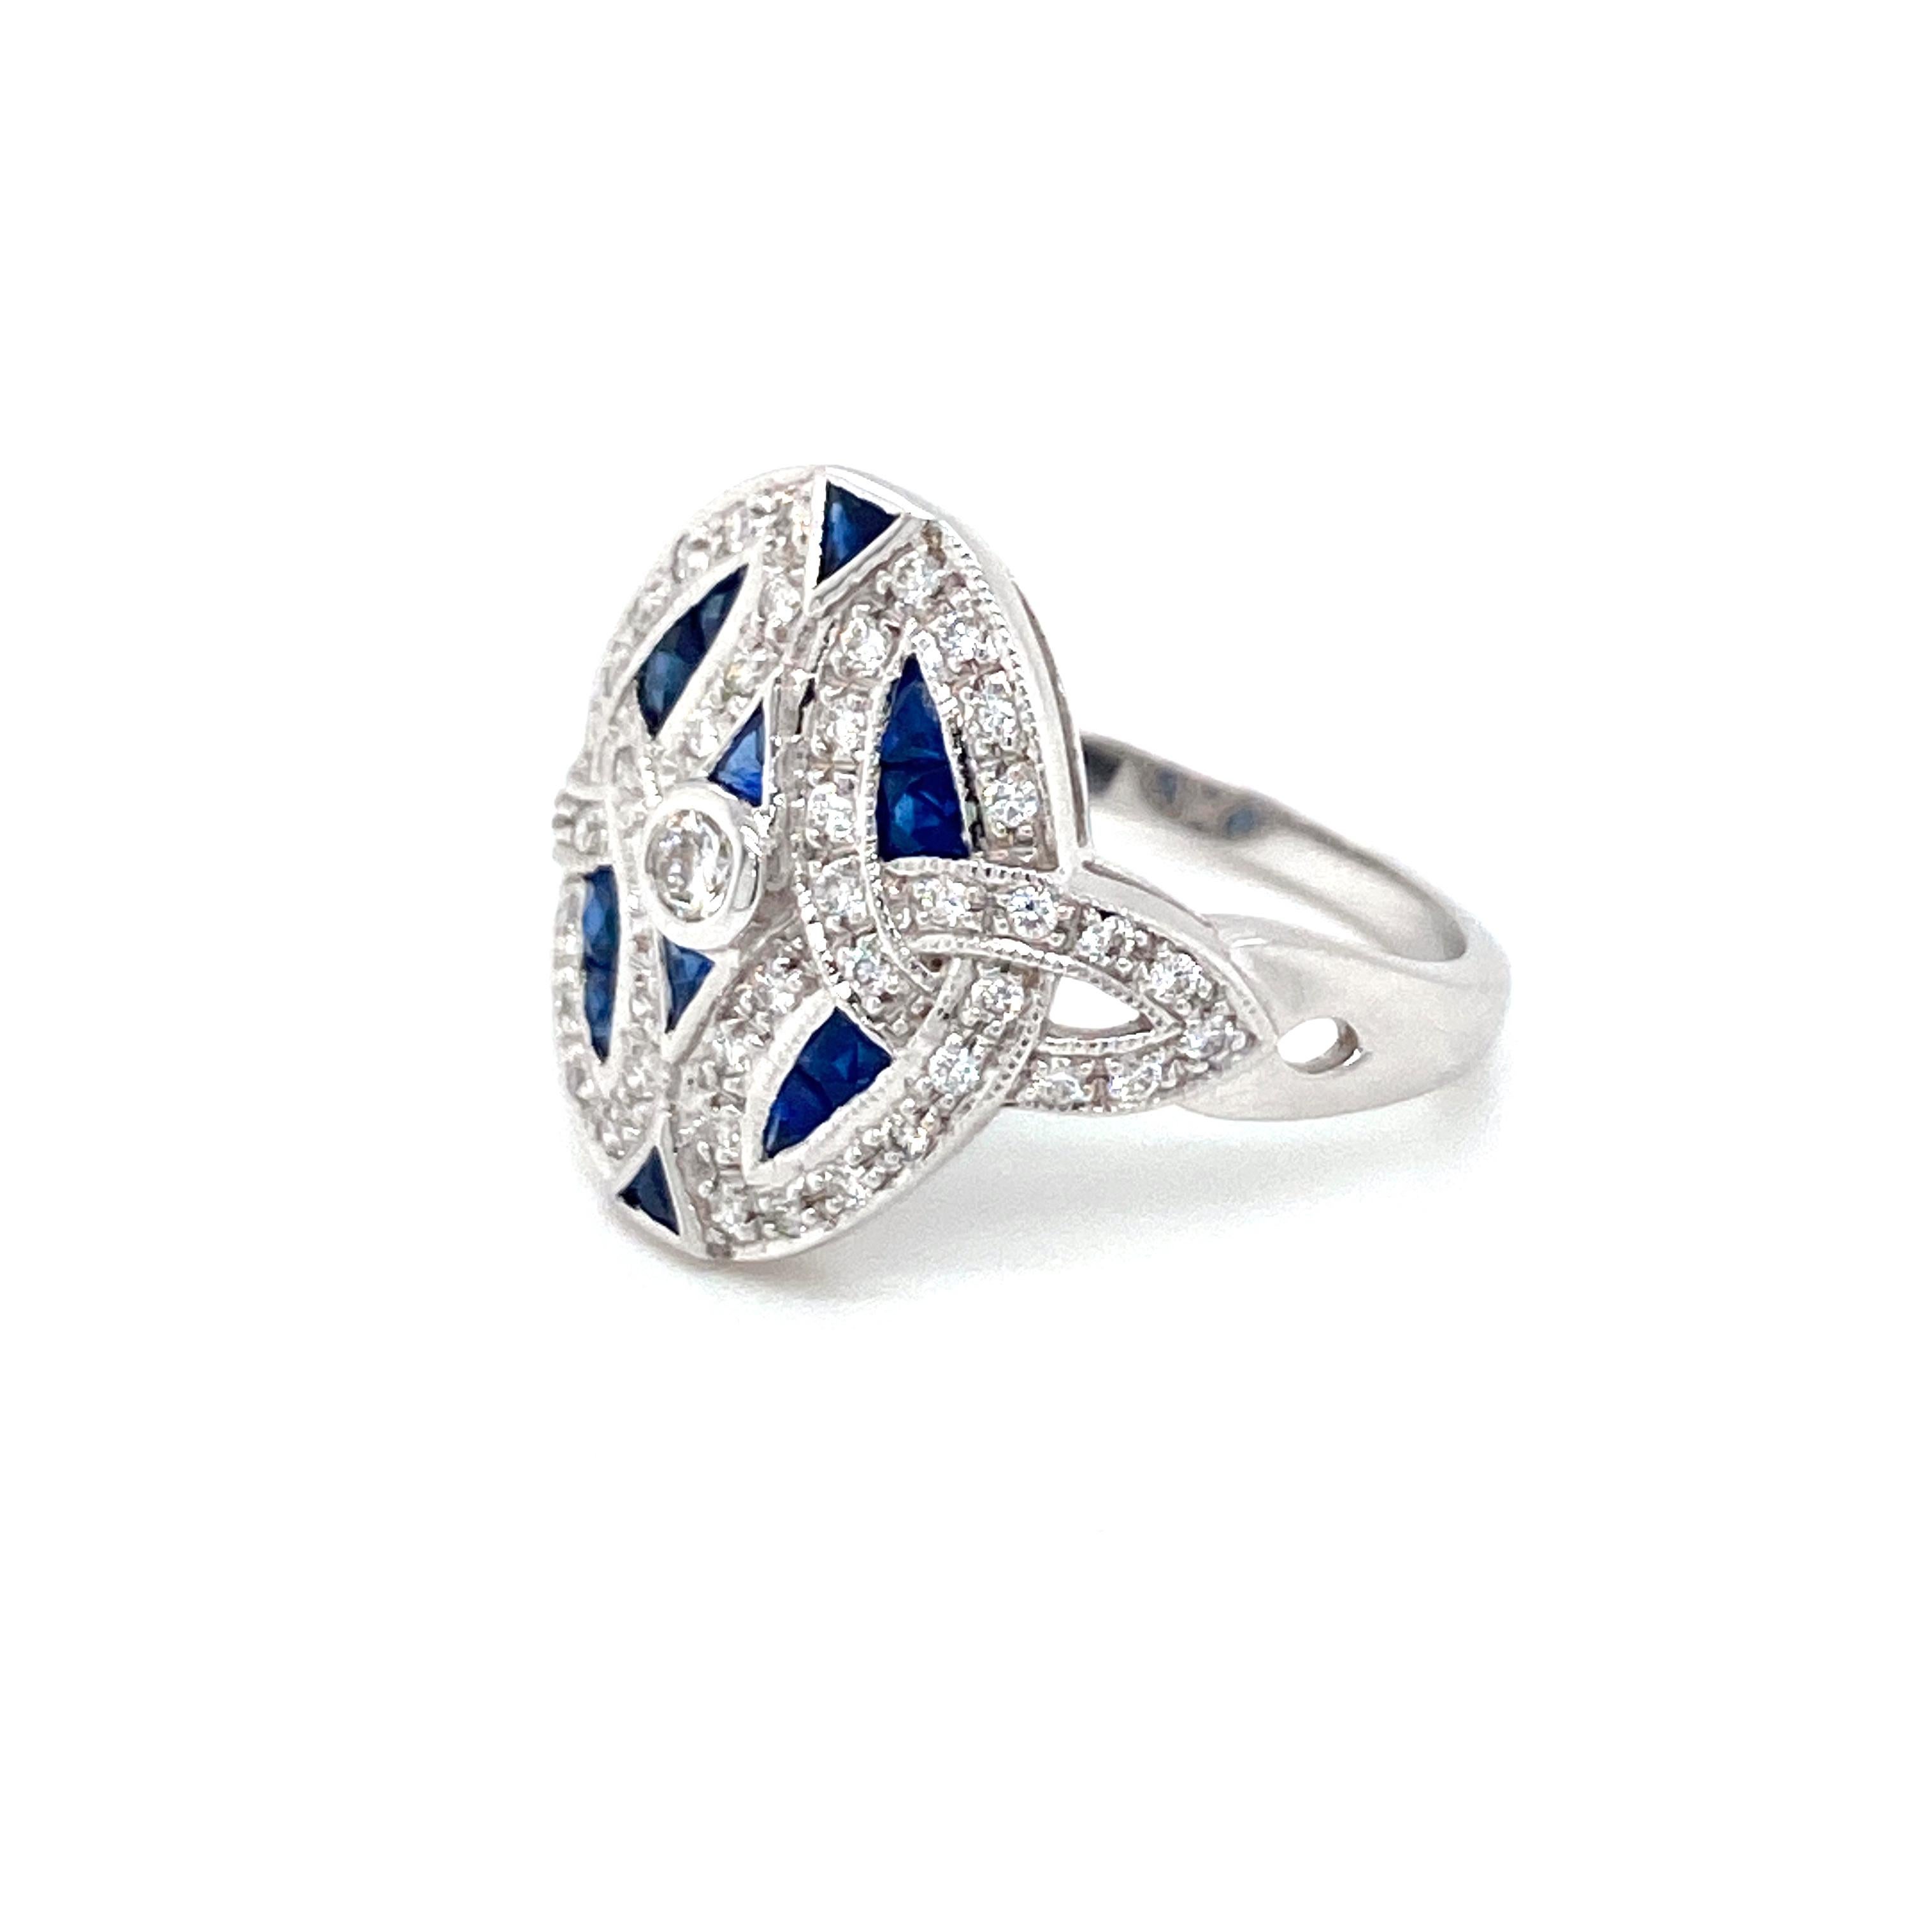 Women's or Men's Art Deco Style Diamond Sapphire Cocktail Ring Estate Fine Jewelry